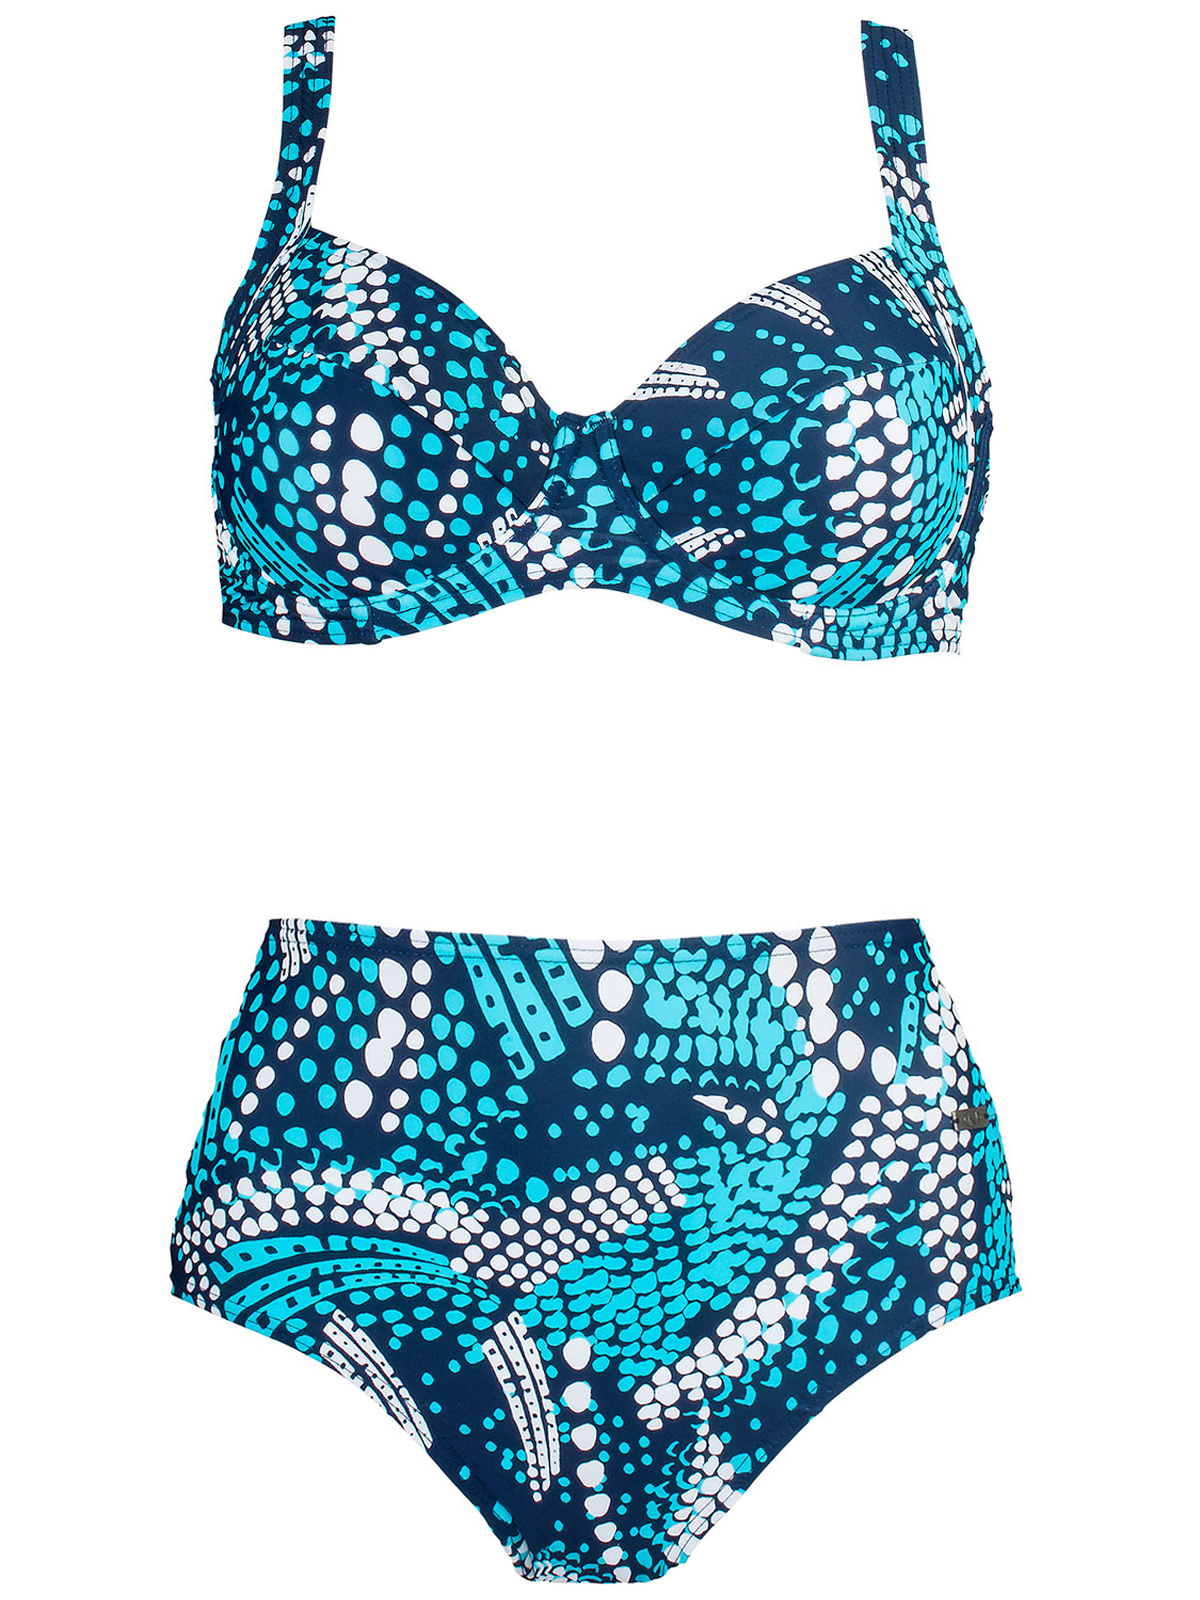 Naturana - - Naturana BLUE Printed High Waist Bikini Set - Size 10 (EU 38)